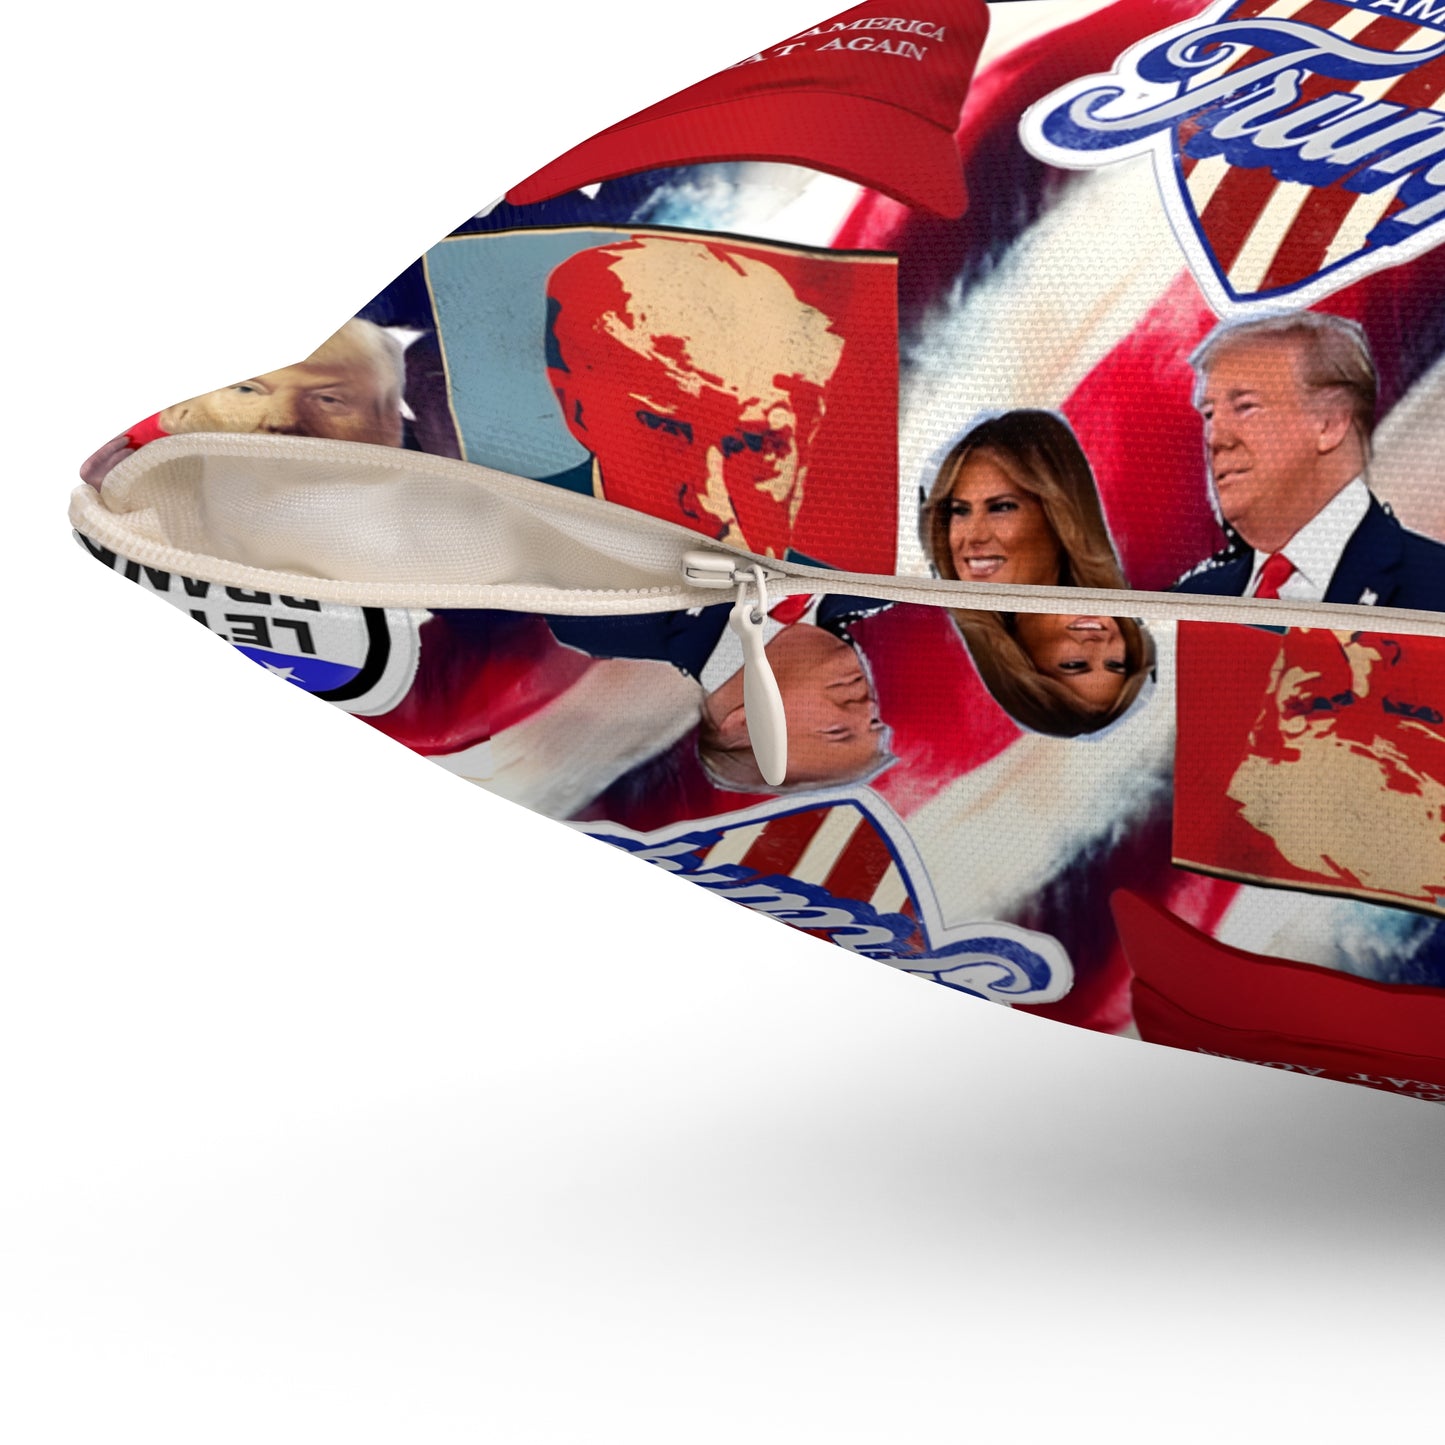 Donald Trump 2024 MAGA Montage Spun Polyester Square Pillow